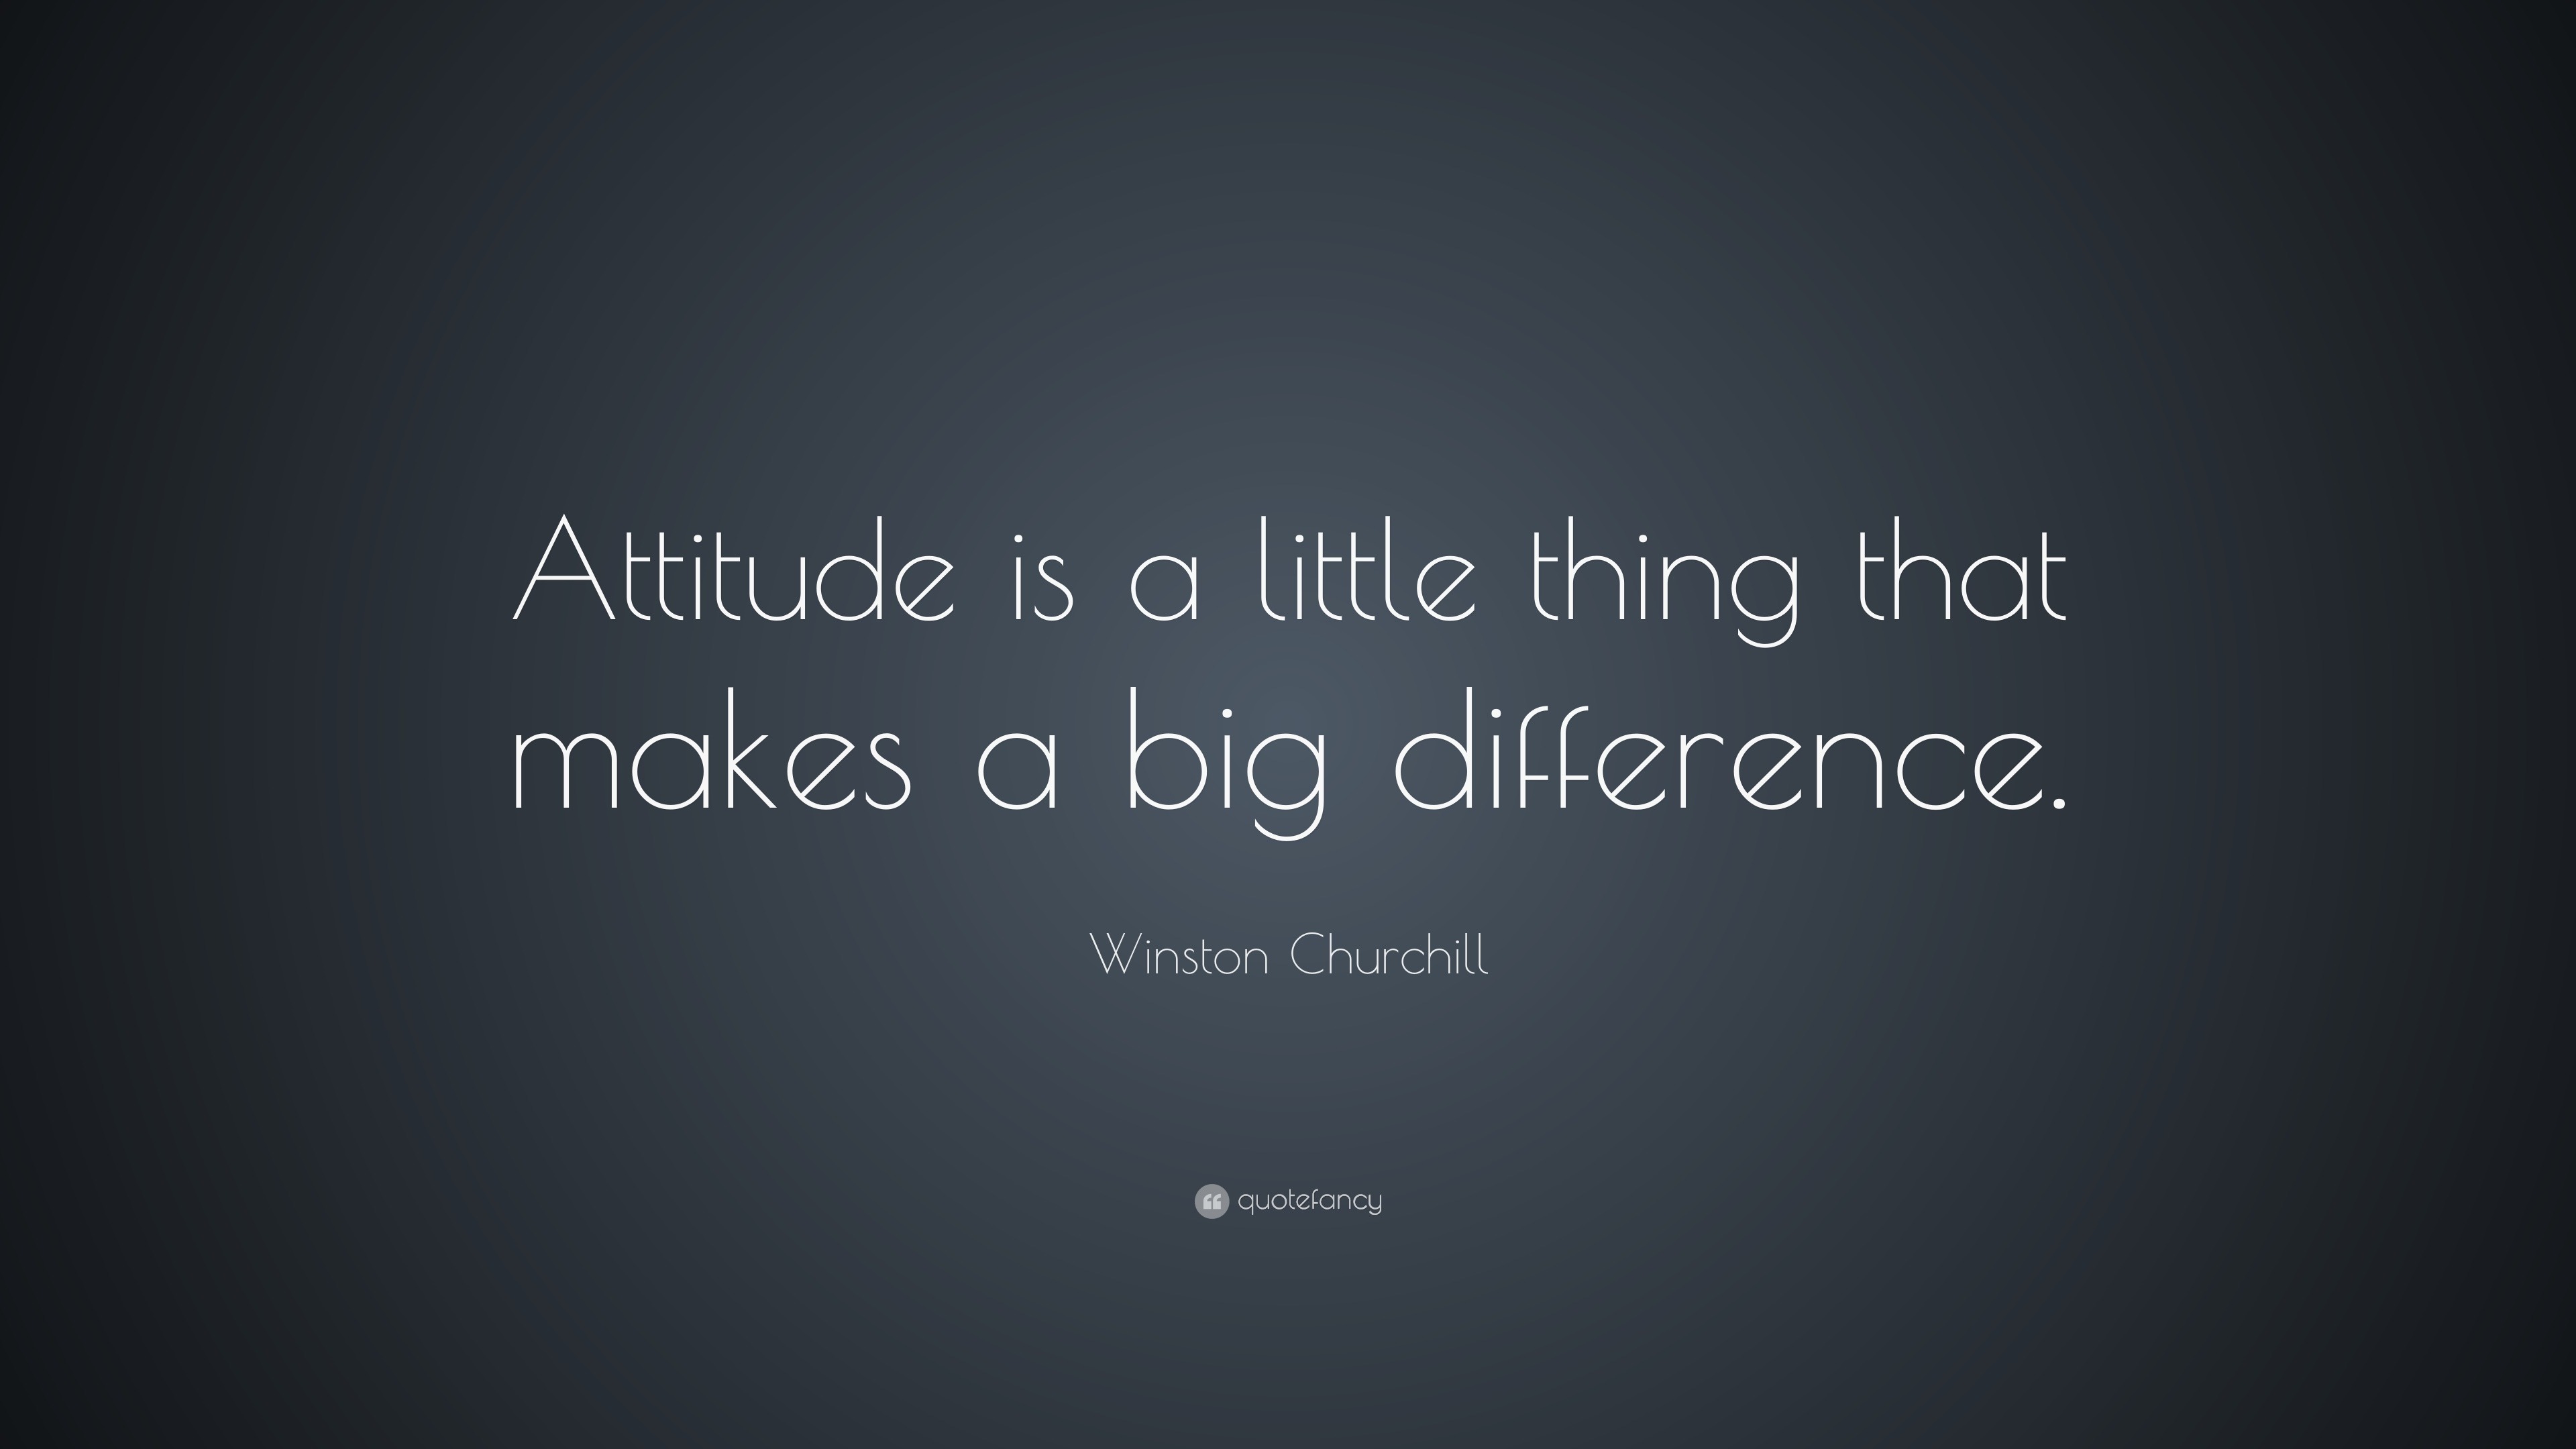 best quotes on attitude